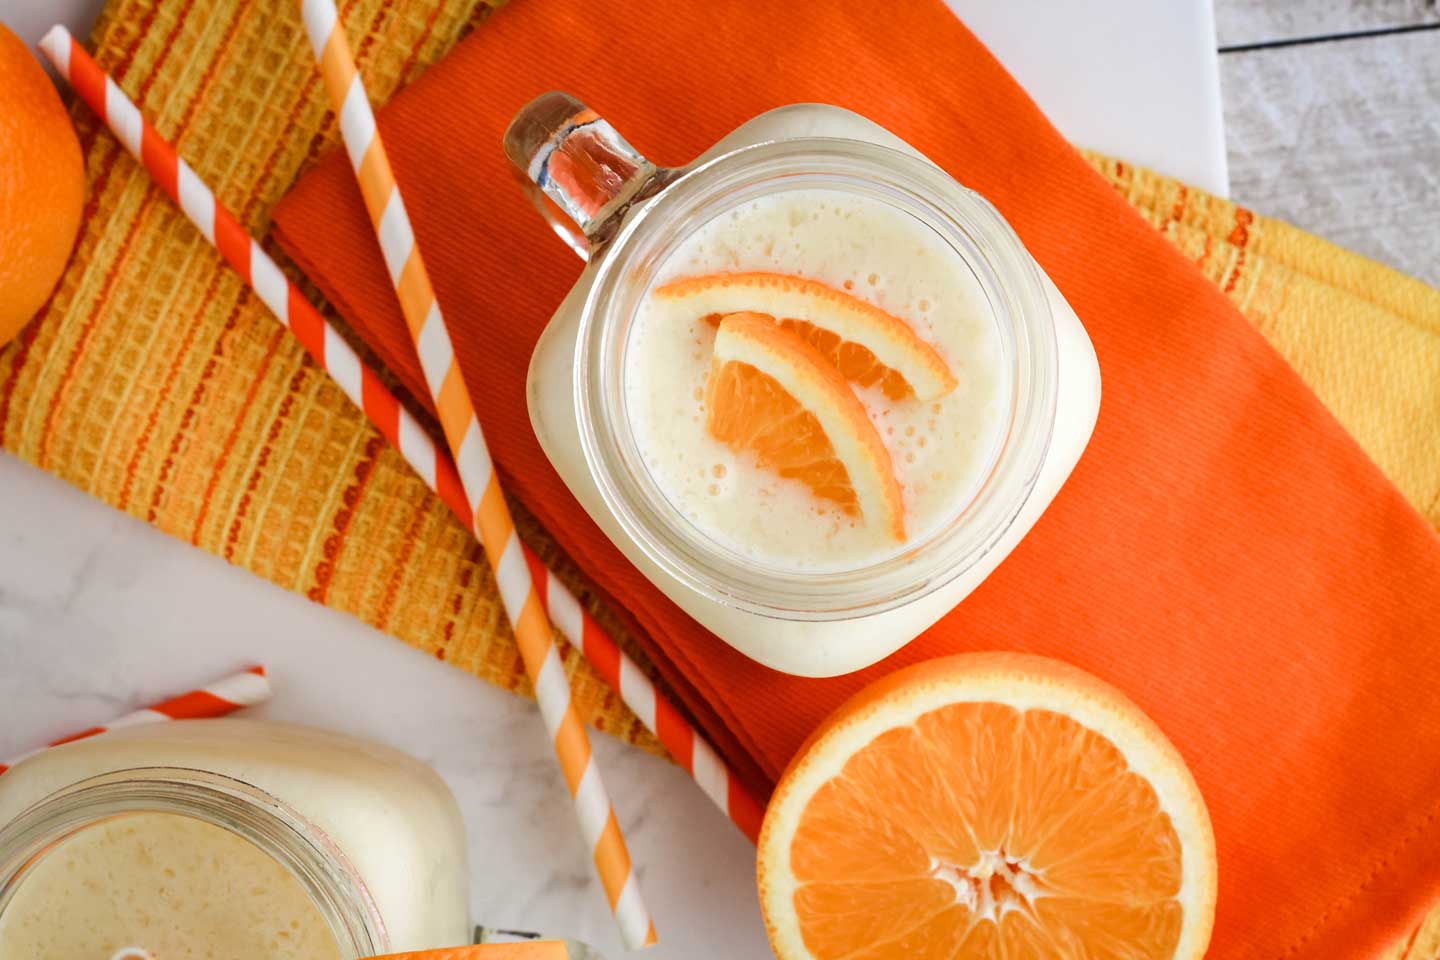 mugs of Pineapple Orange Creamsicle Smoothie on orange and yellow napkins with decorative straws and oranges